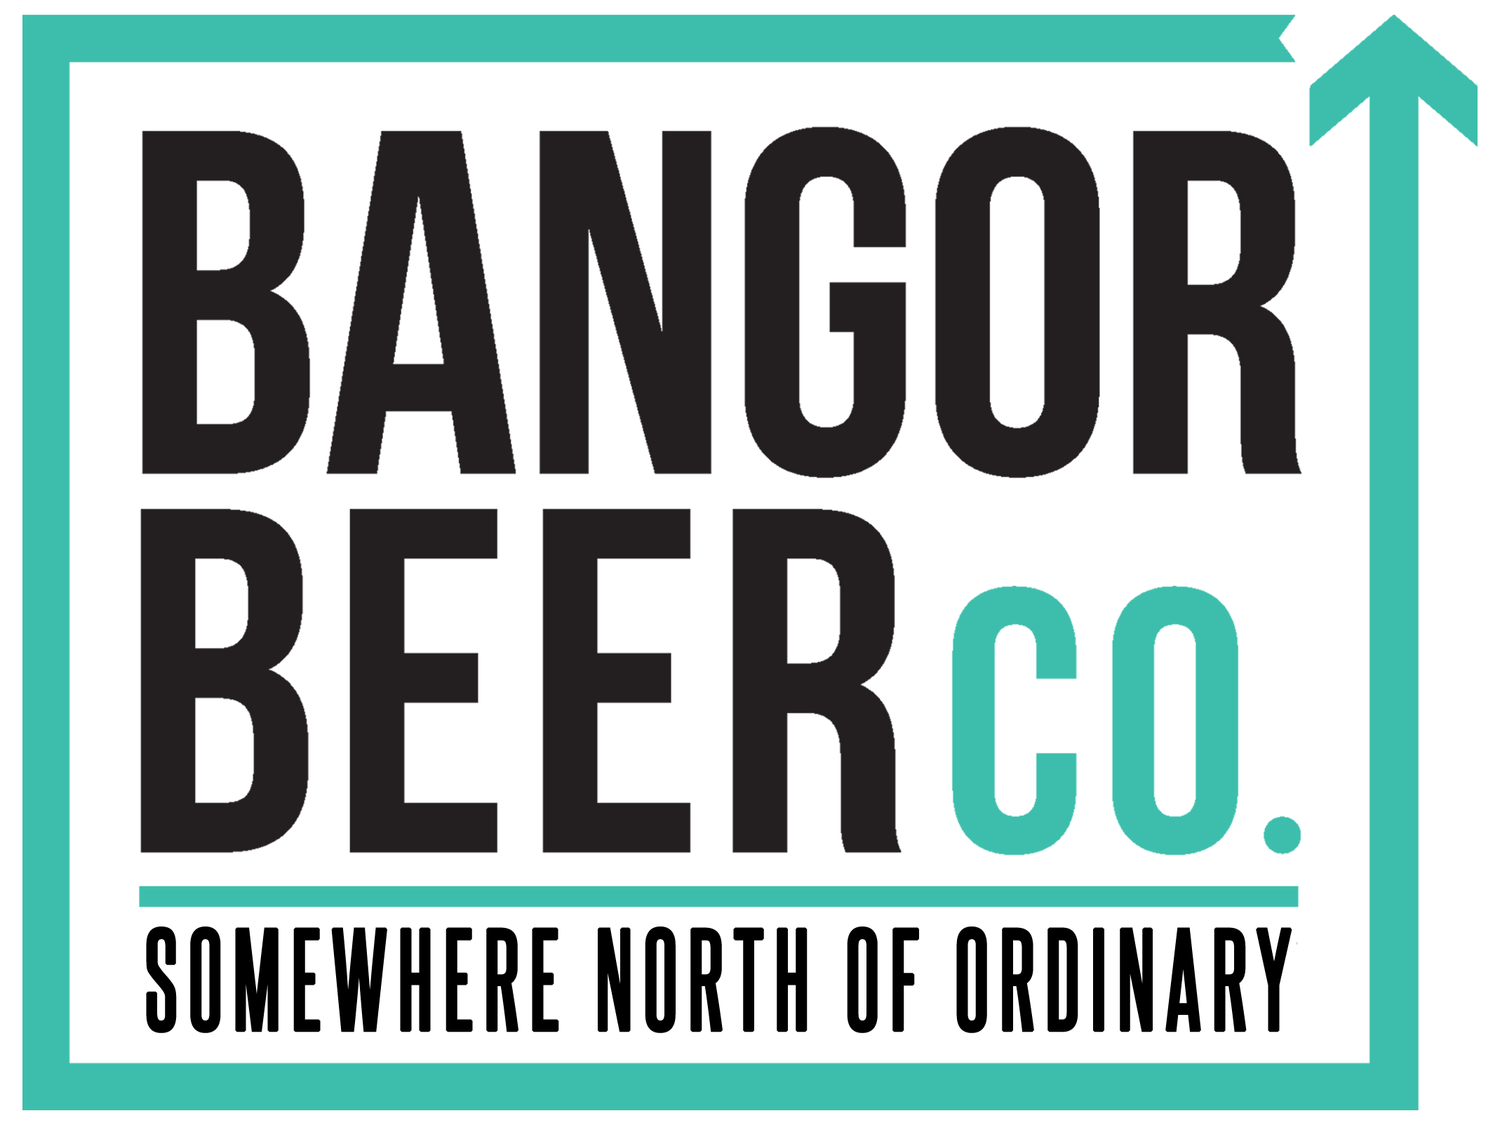 Bangor Beer Company